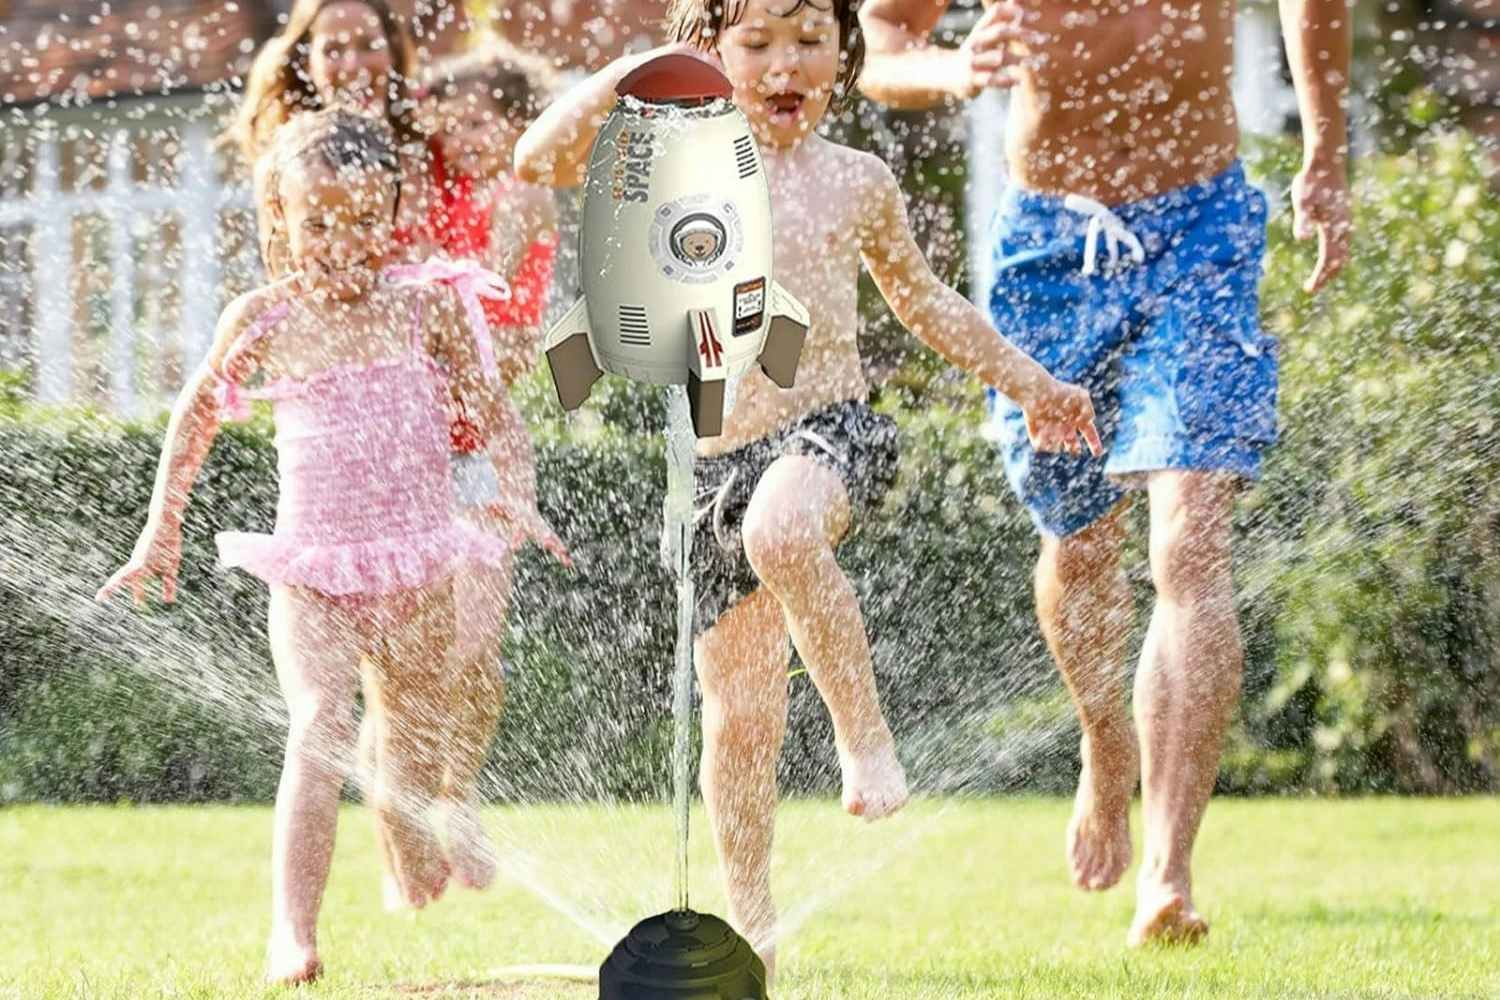 Sprinkler Rocket Toy, Only $17.99 at Amazon (Reg. $49.99)